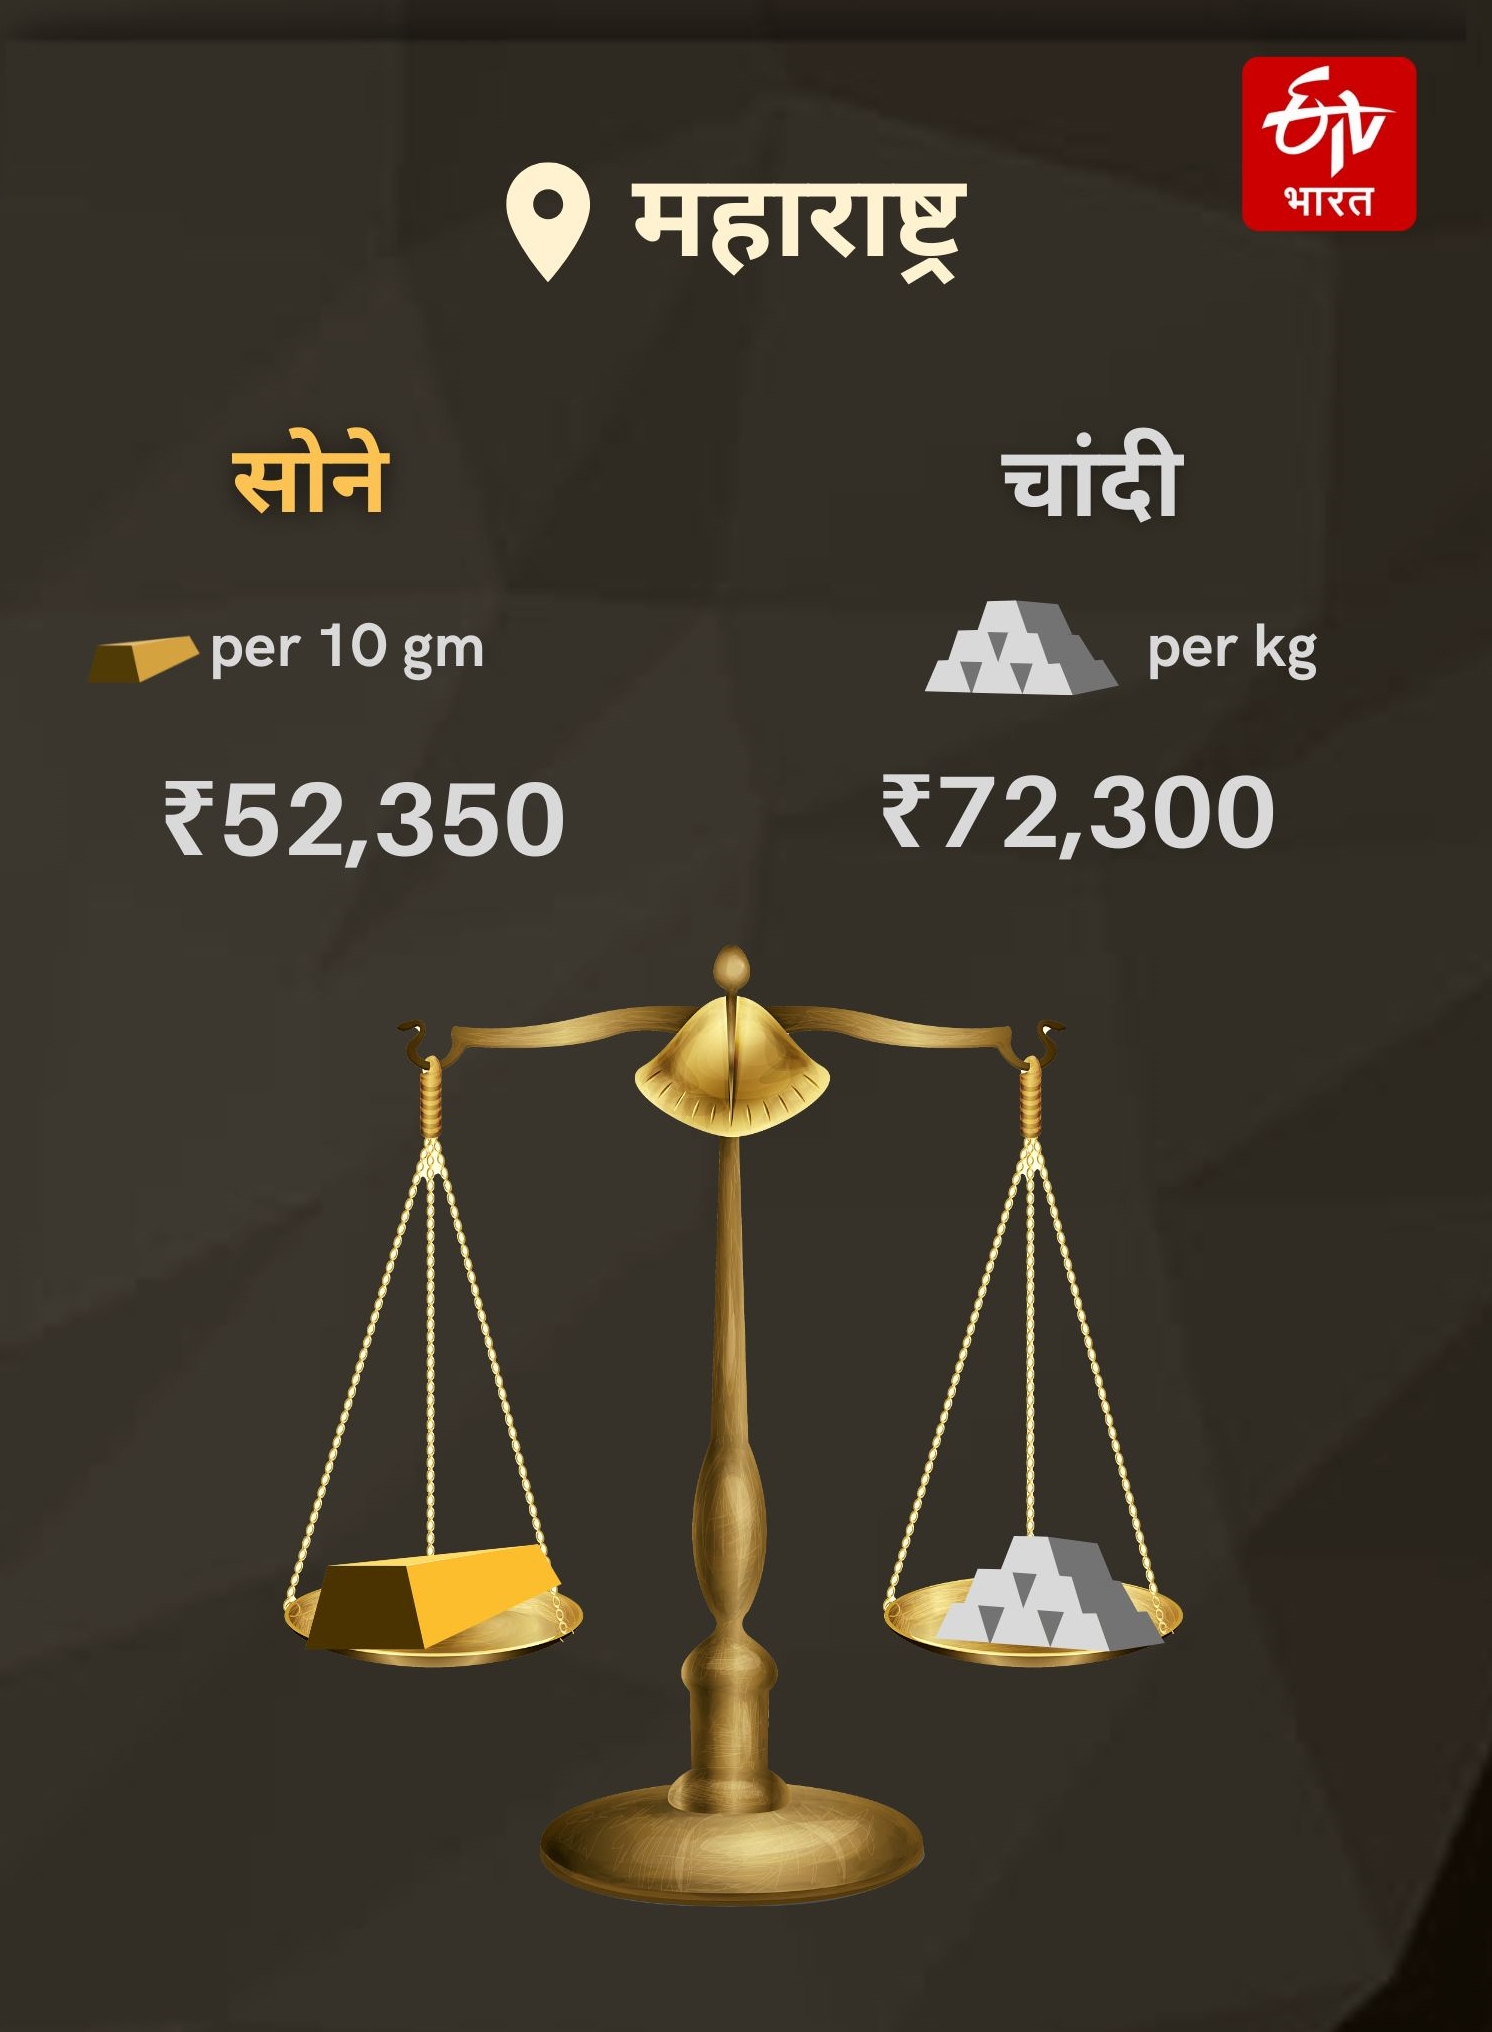 Price of 1 gram of 22 carat gold